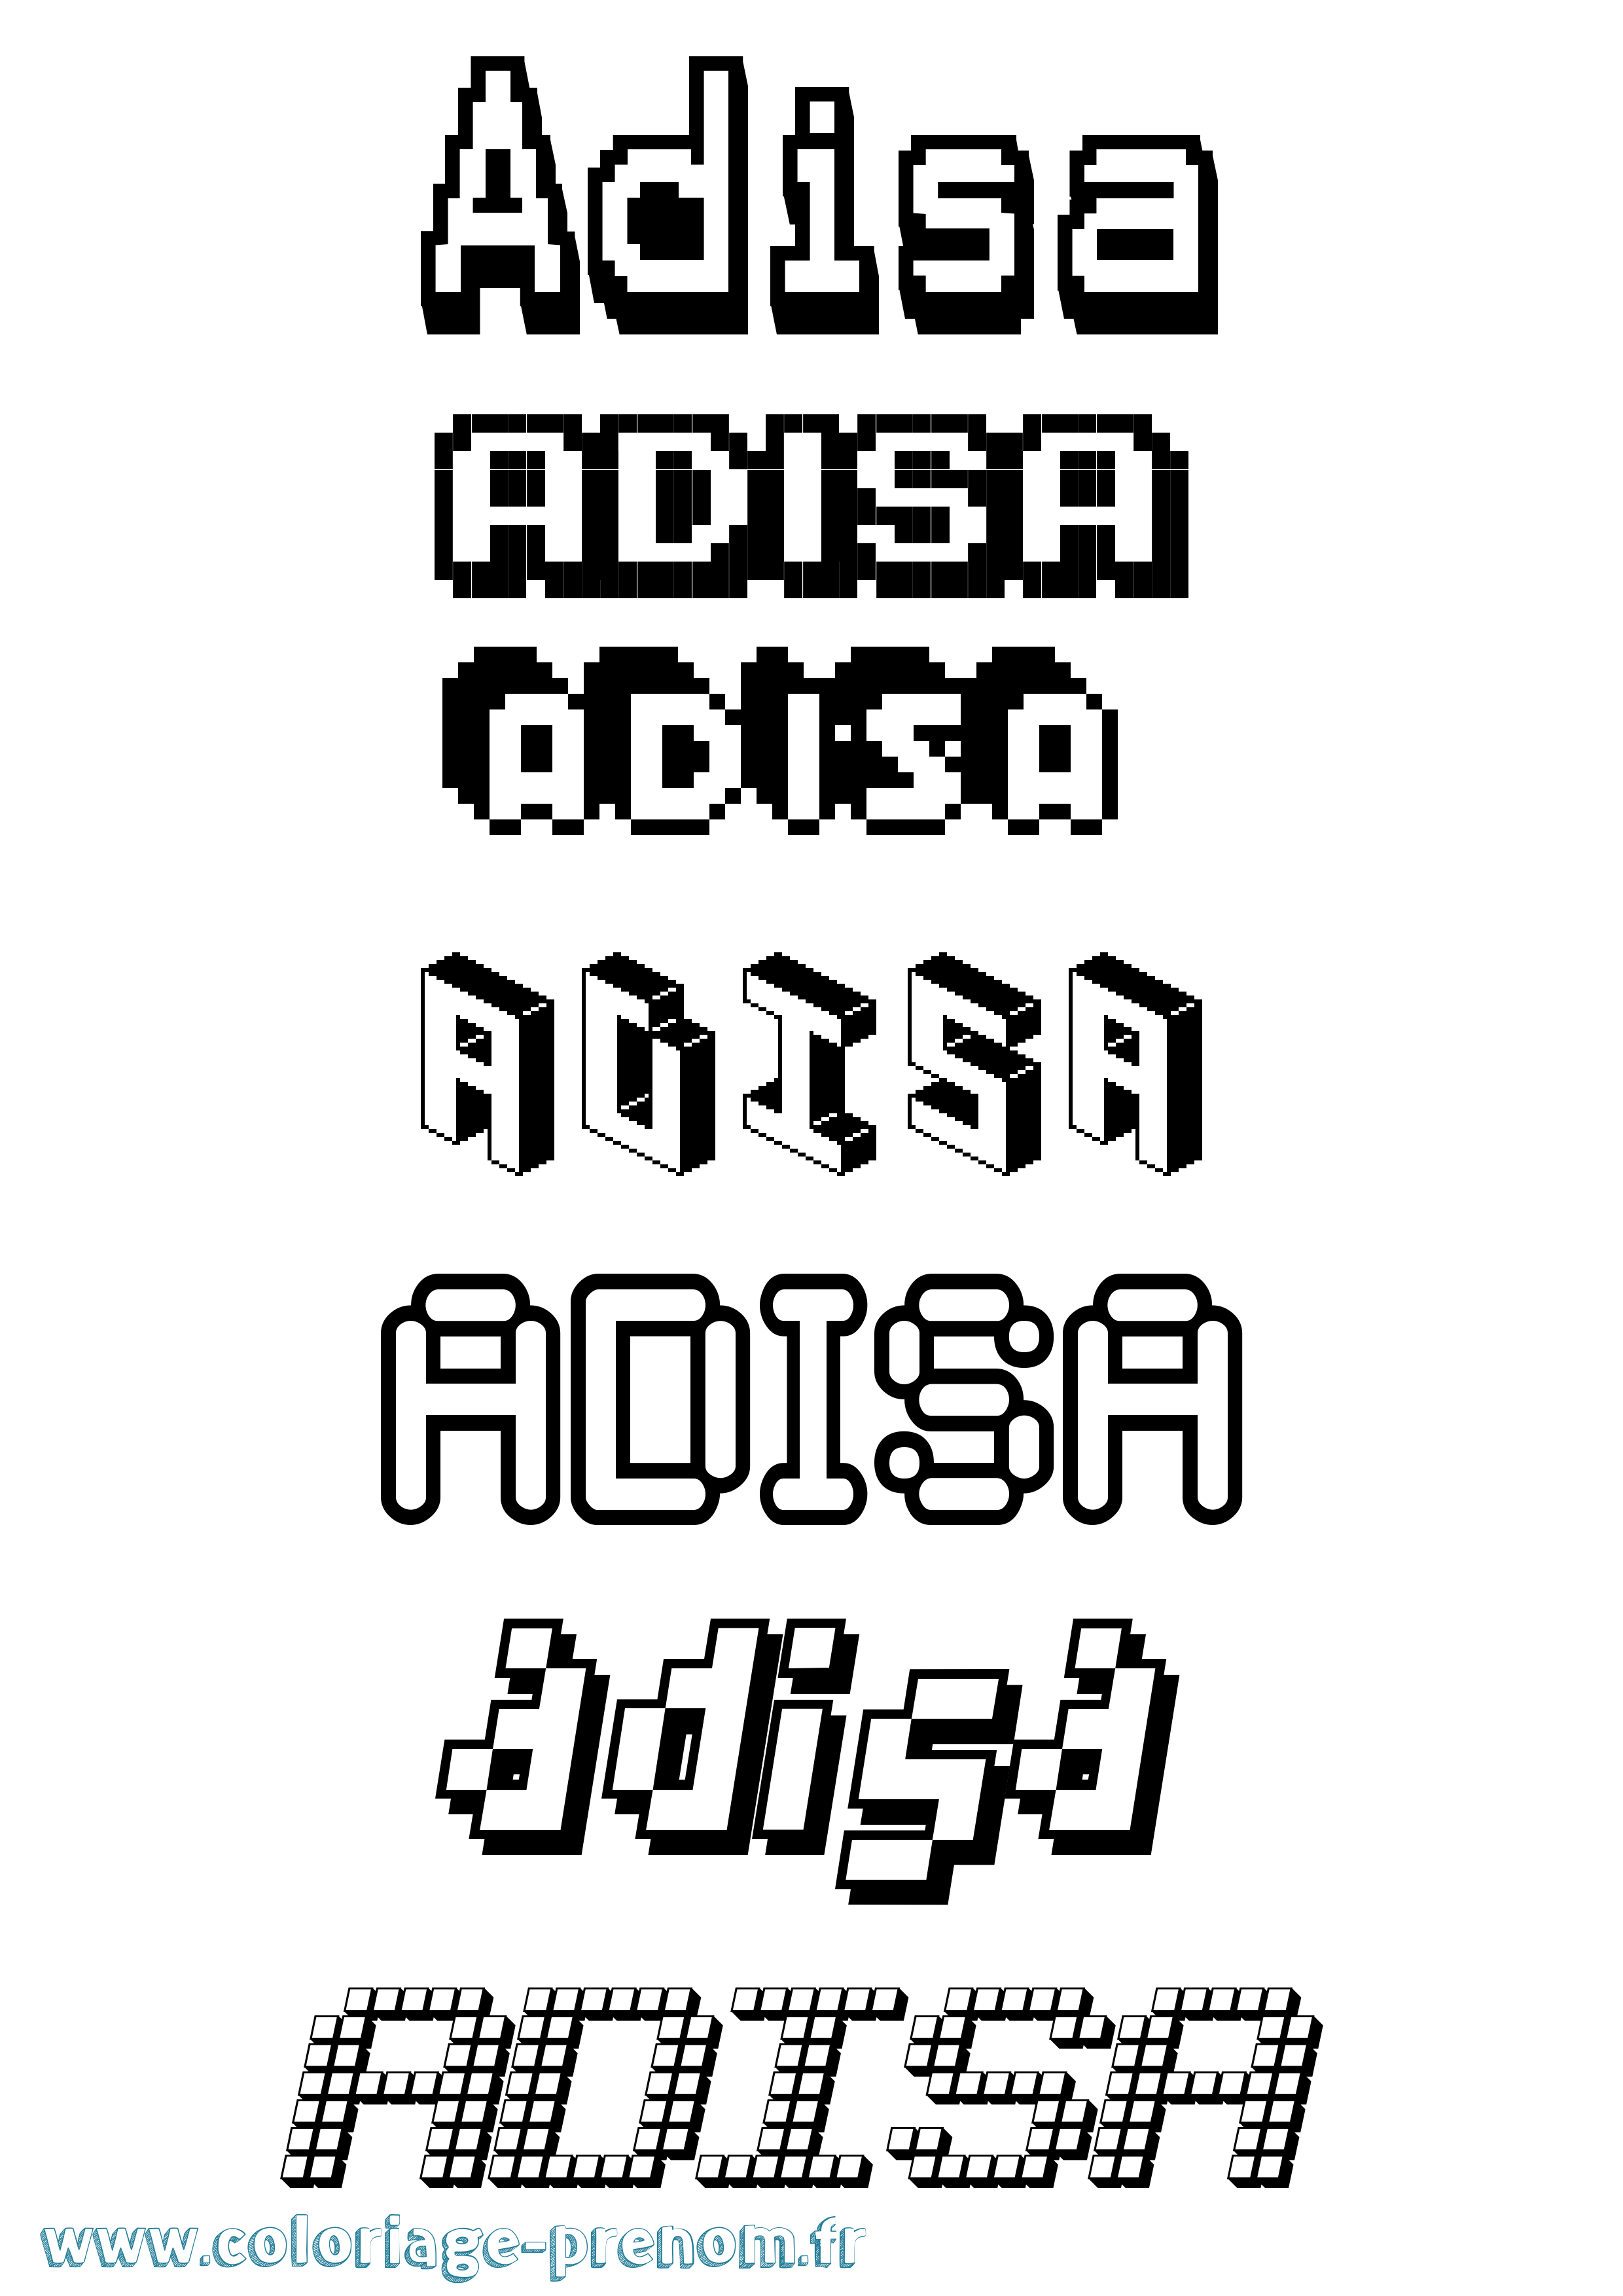 Coloriage prénom Adisa Pixel